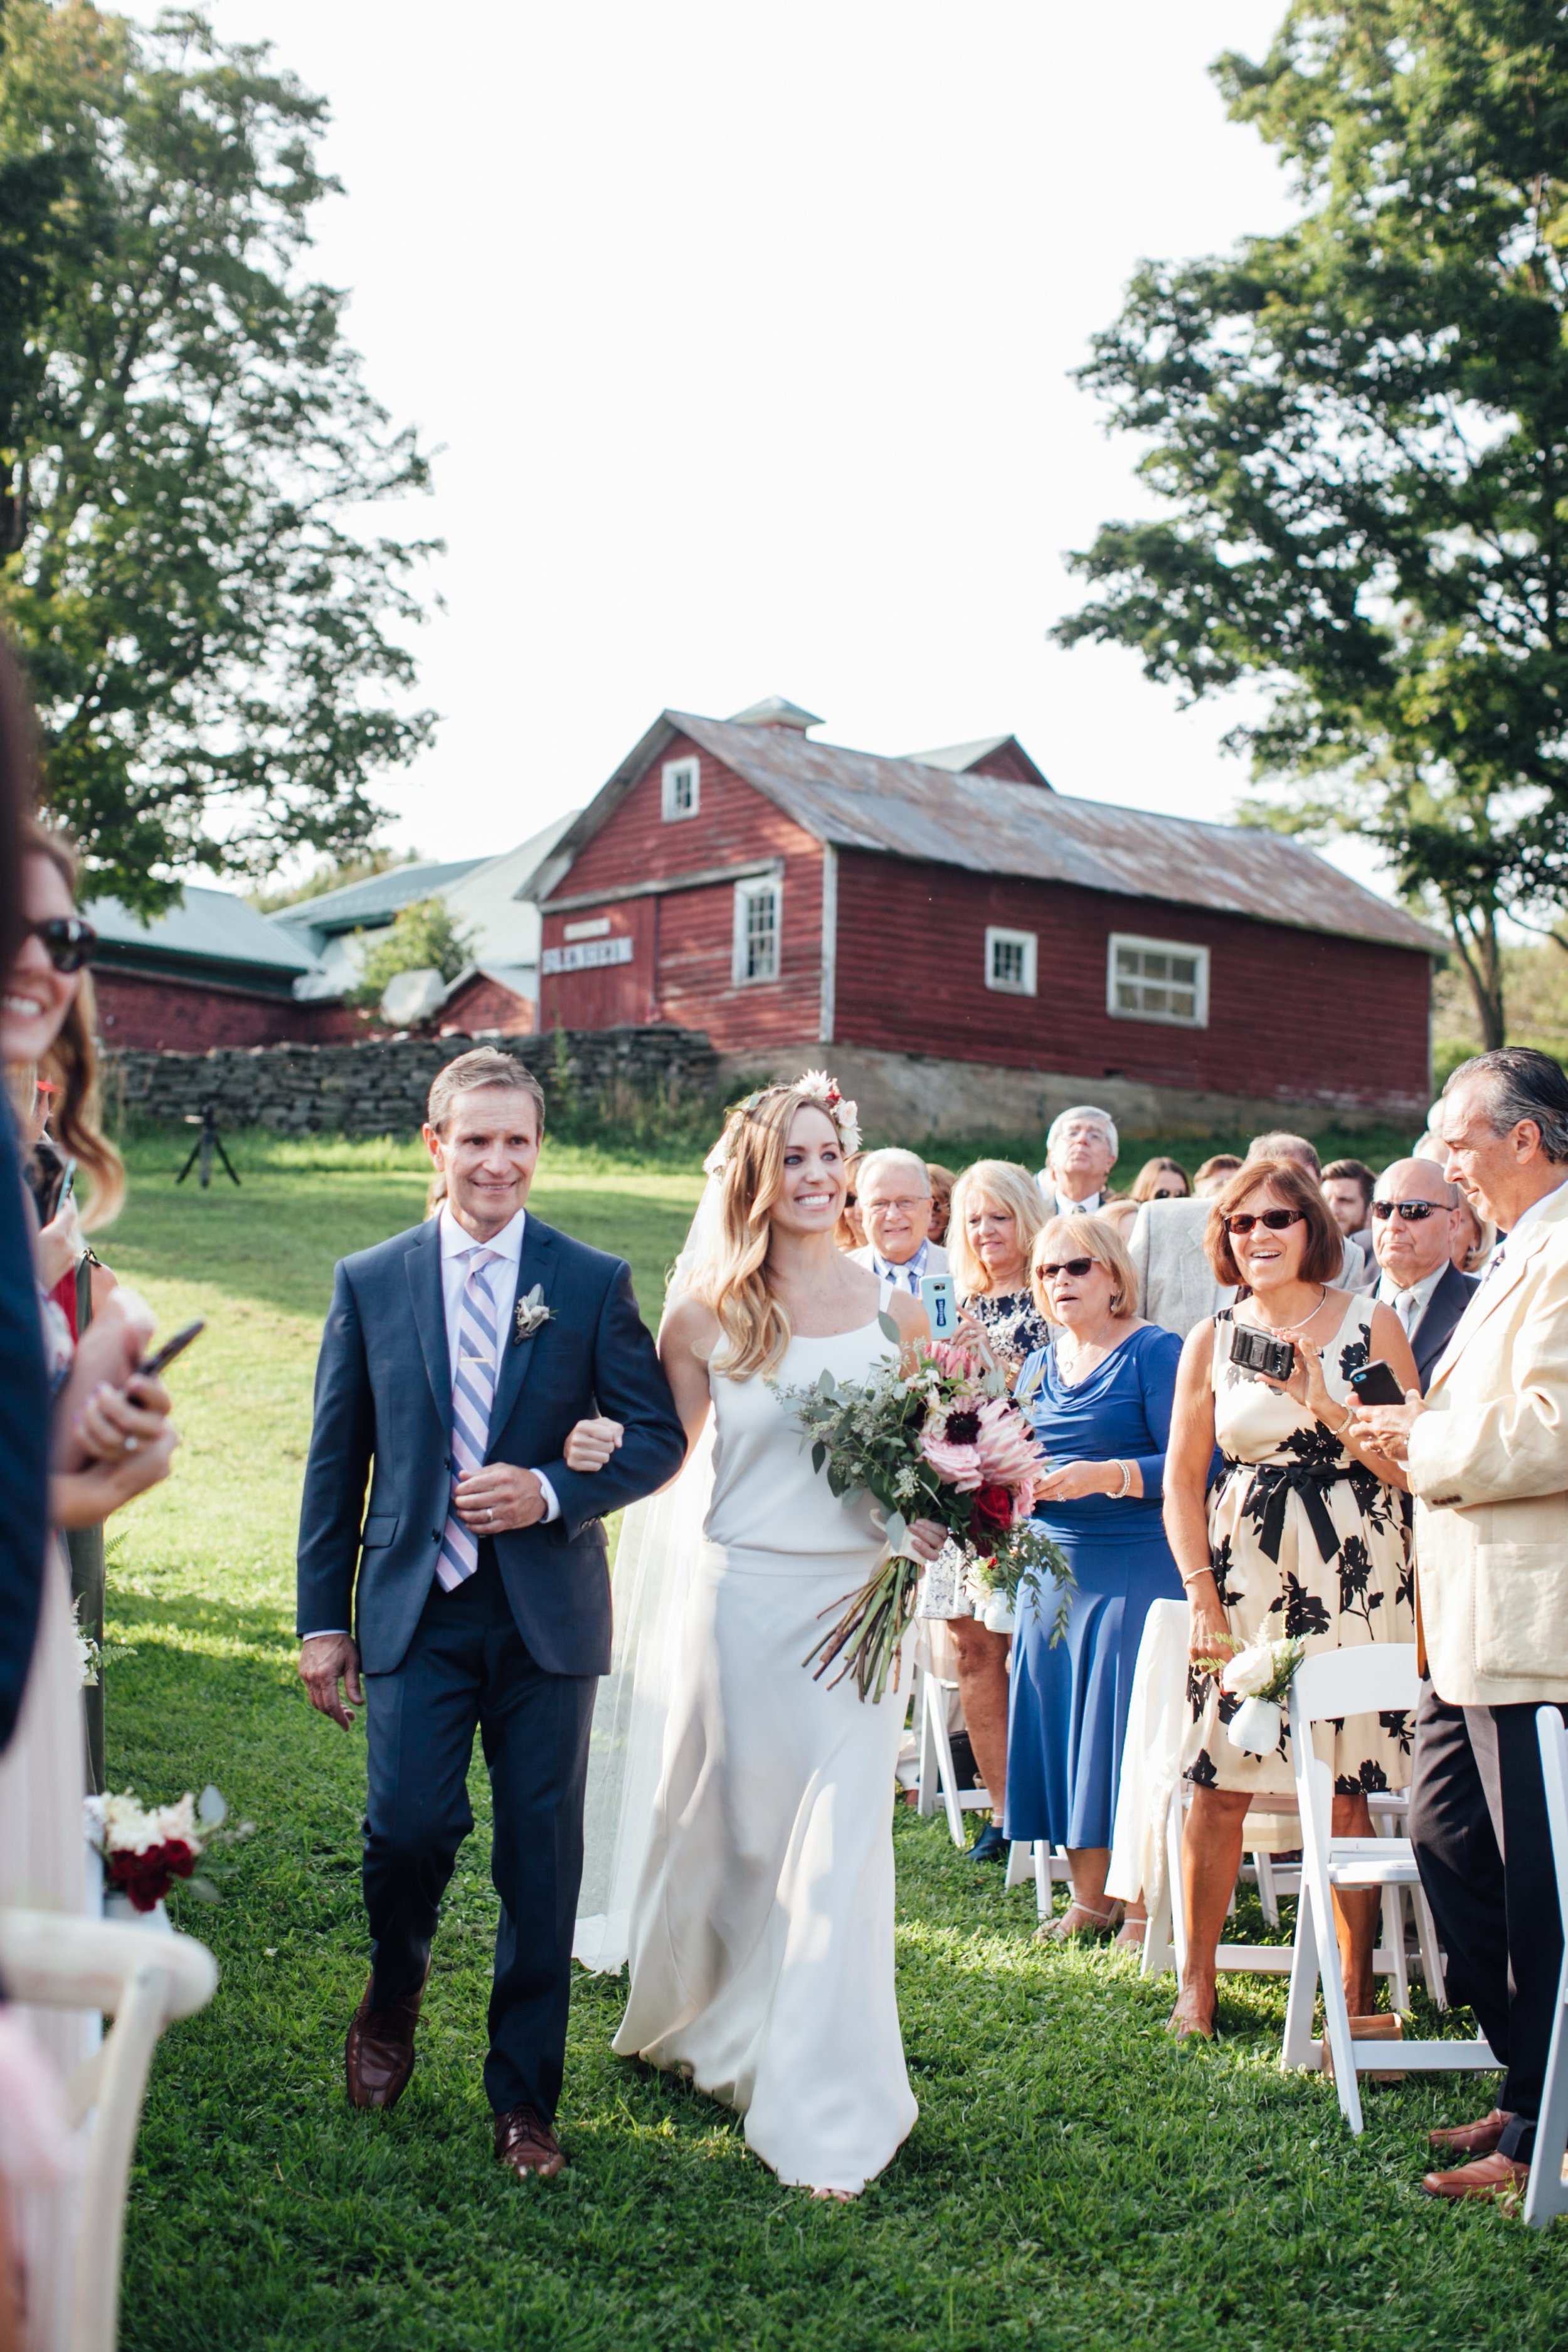 Courtney + Matt Blenheim Hill Farm Catskills NY Wedding Veronica Lola Photography 2017-375.jpg